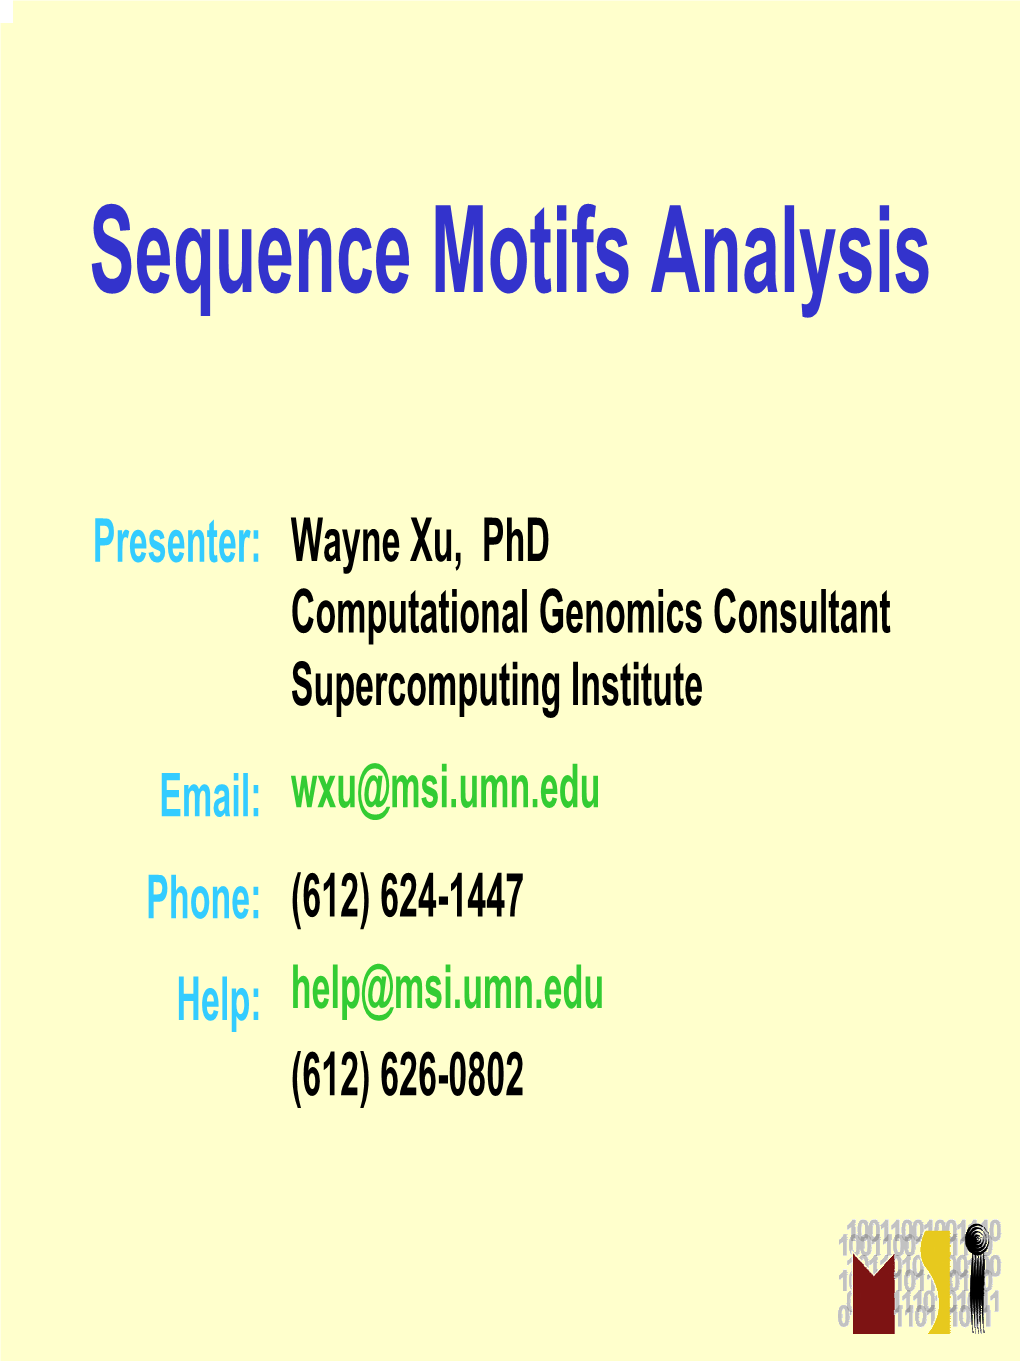 Bioinformatics Tools at the Supercomputing Institute